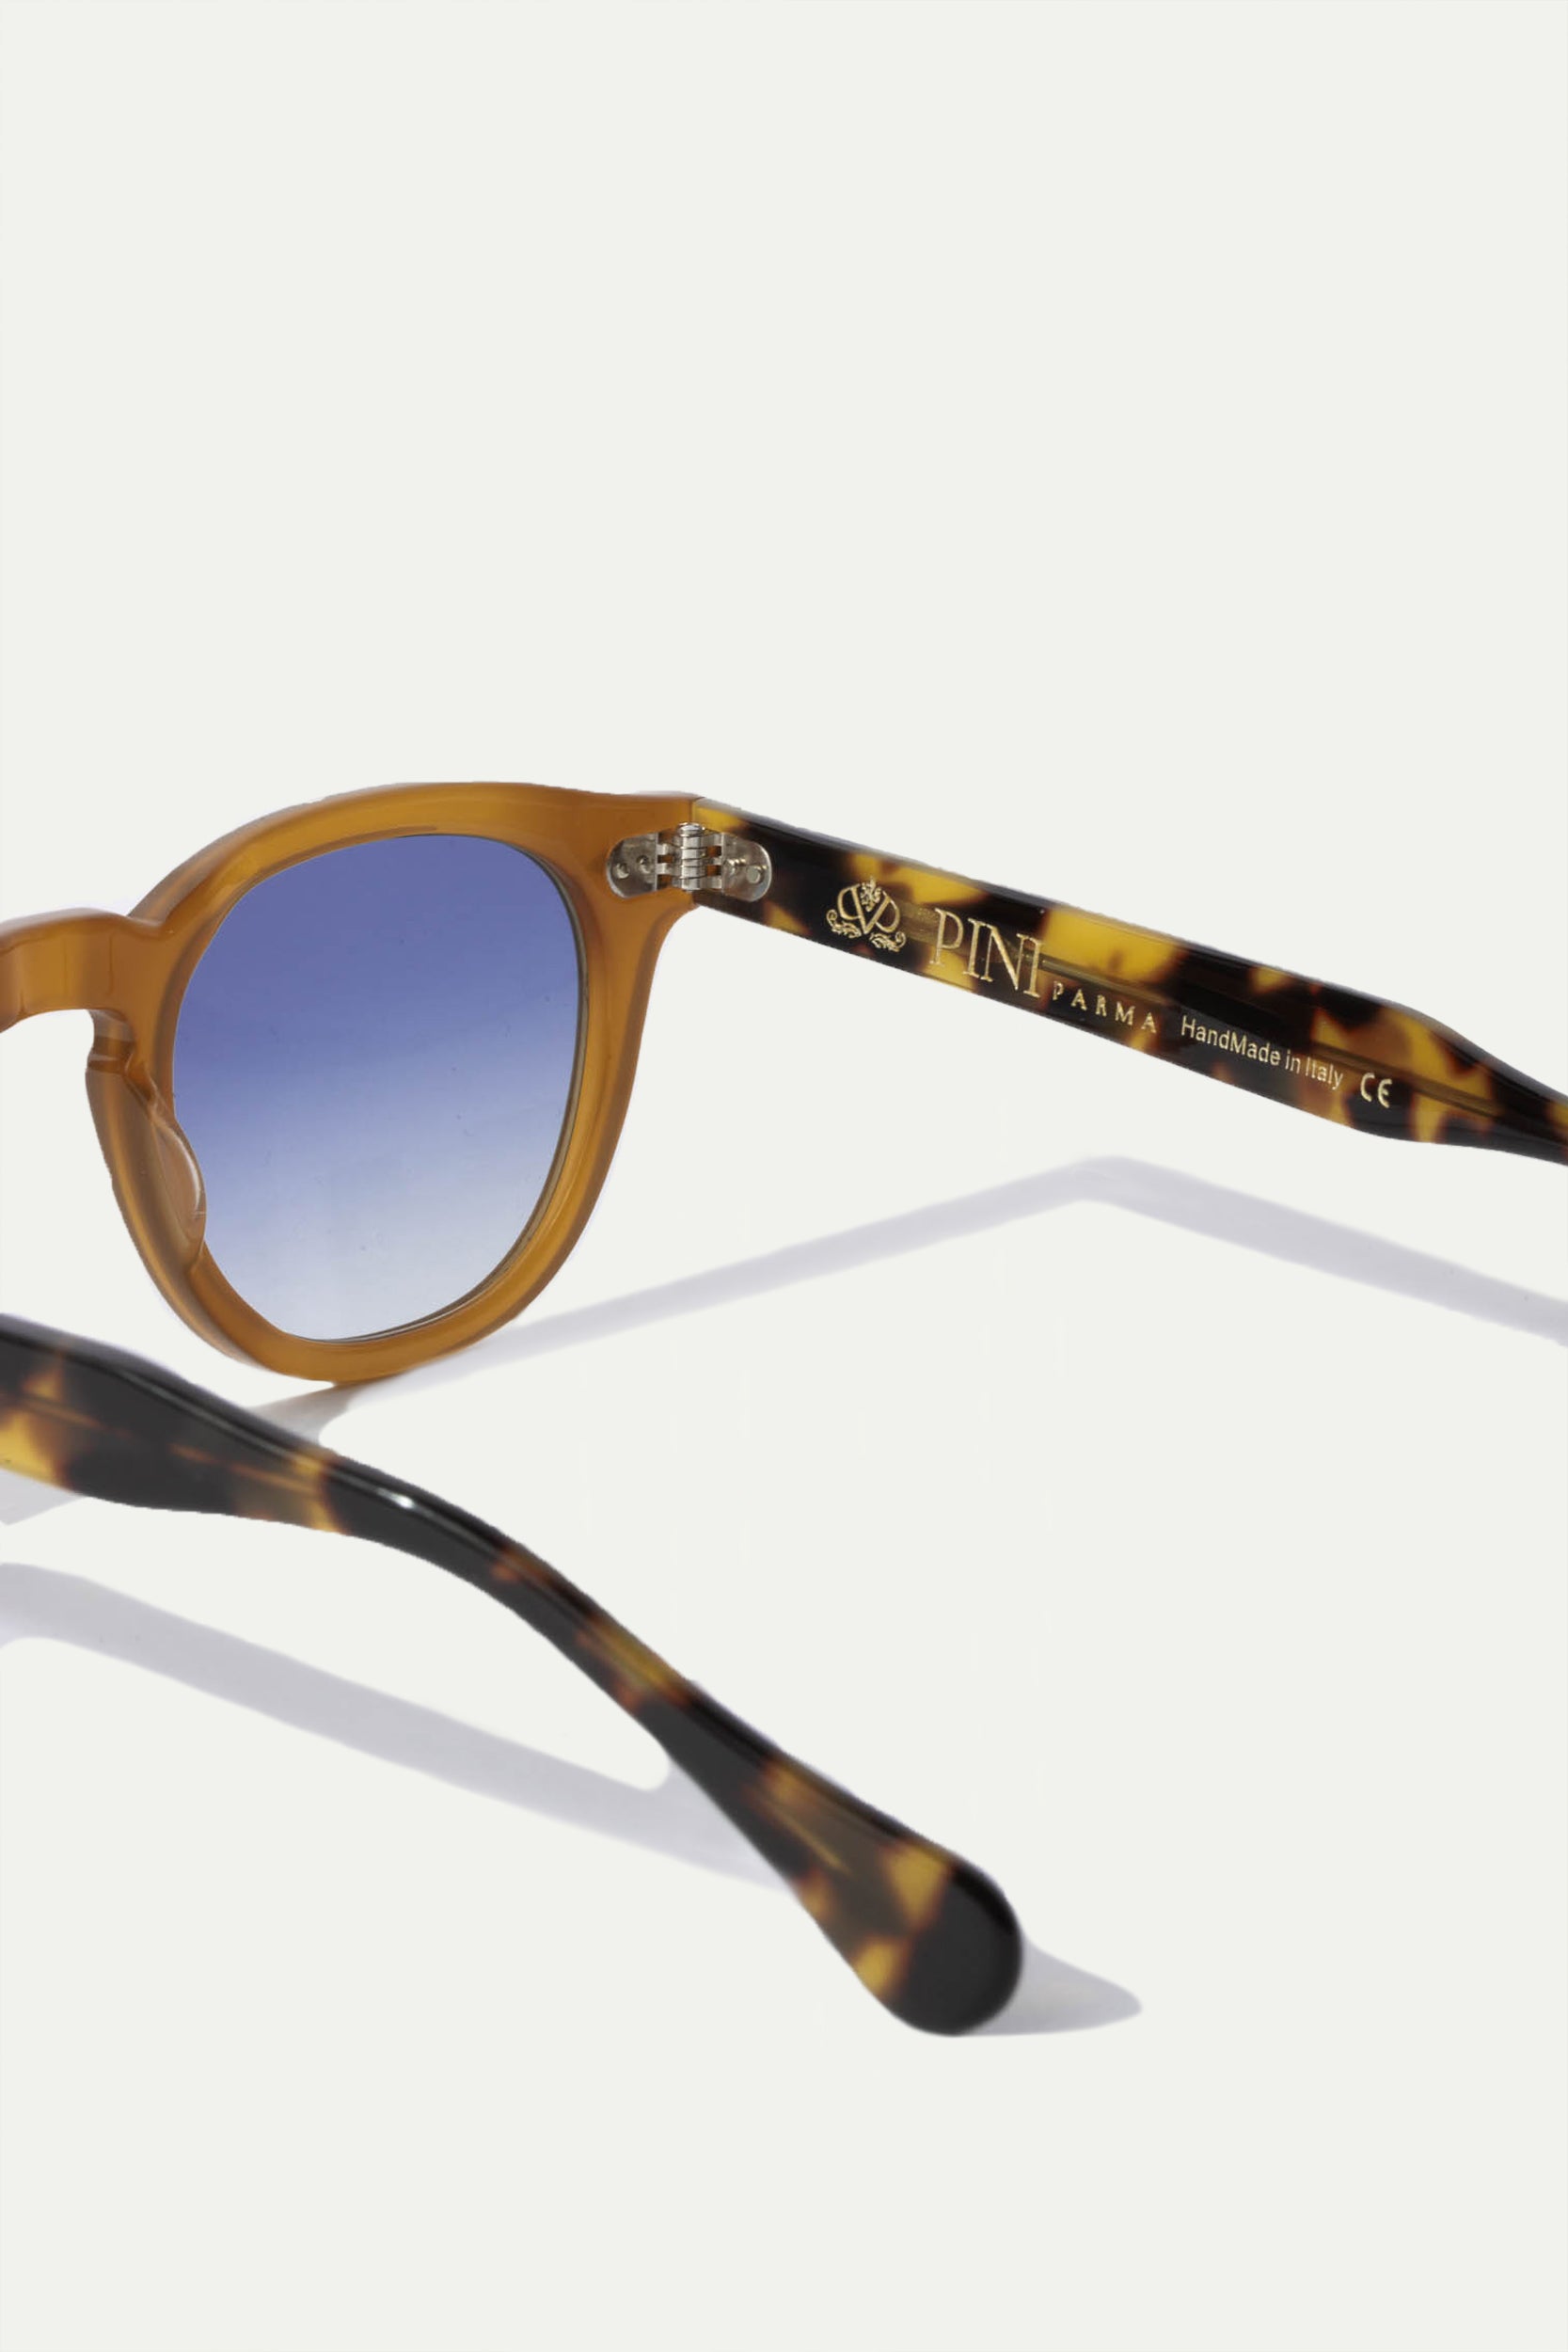 Yellow sunglasses Amalfi - Made in Italy